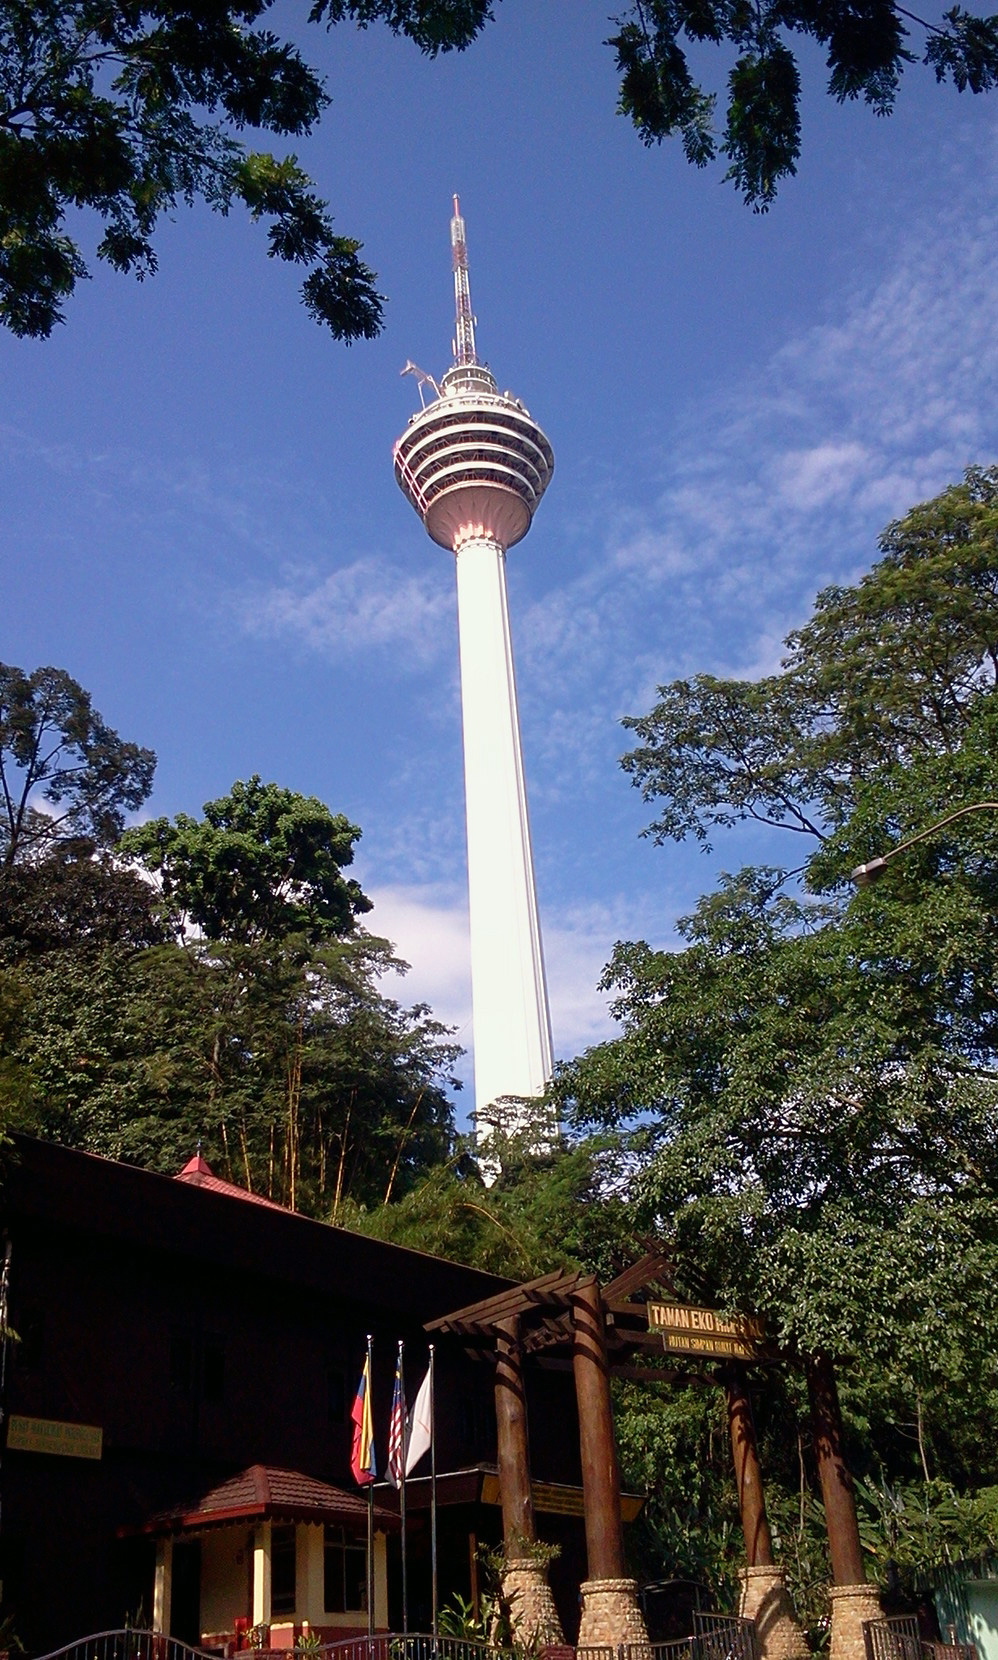 KL Tower, Menara Kuala Lumpur, features an antenna that 